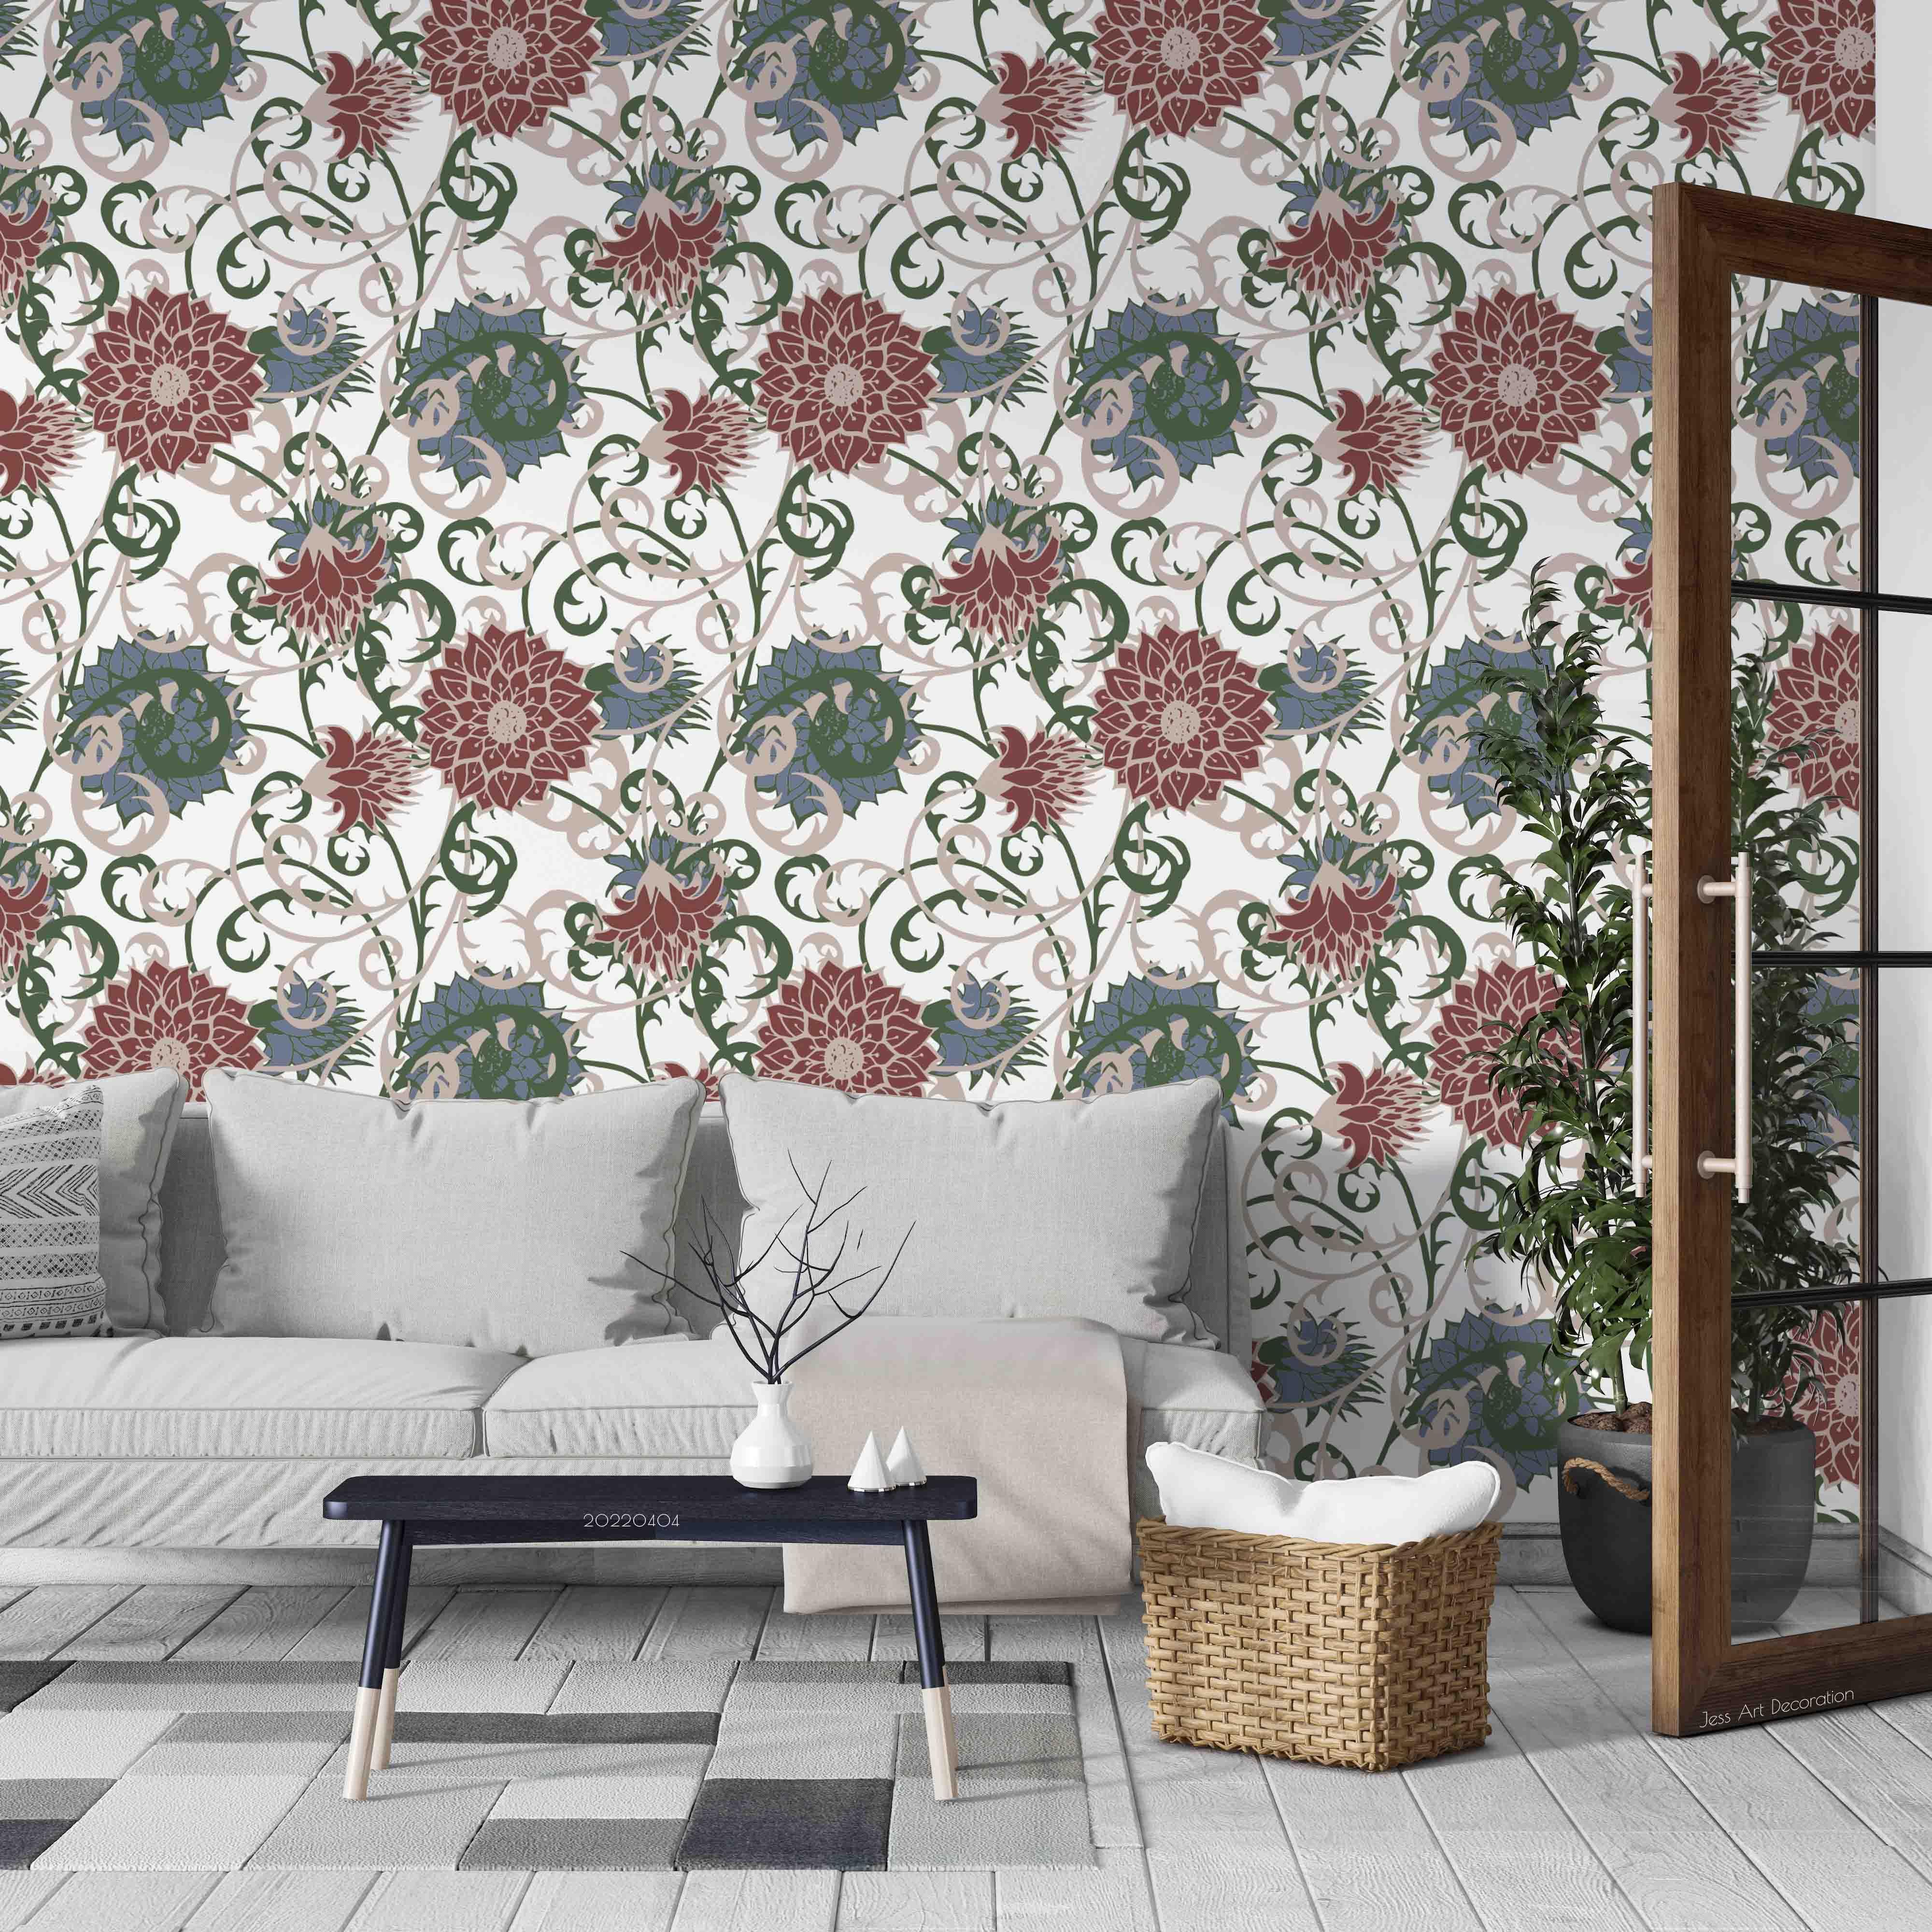 3D Vintage Plants Rattan Floral Wall Mural Wallpaper GD 4014- Jess Art Decoration